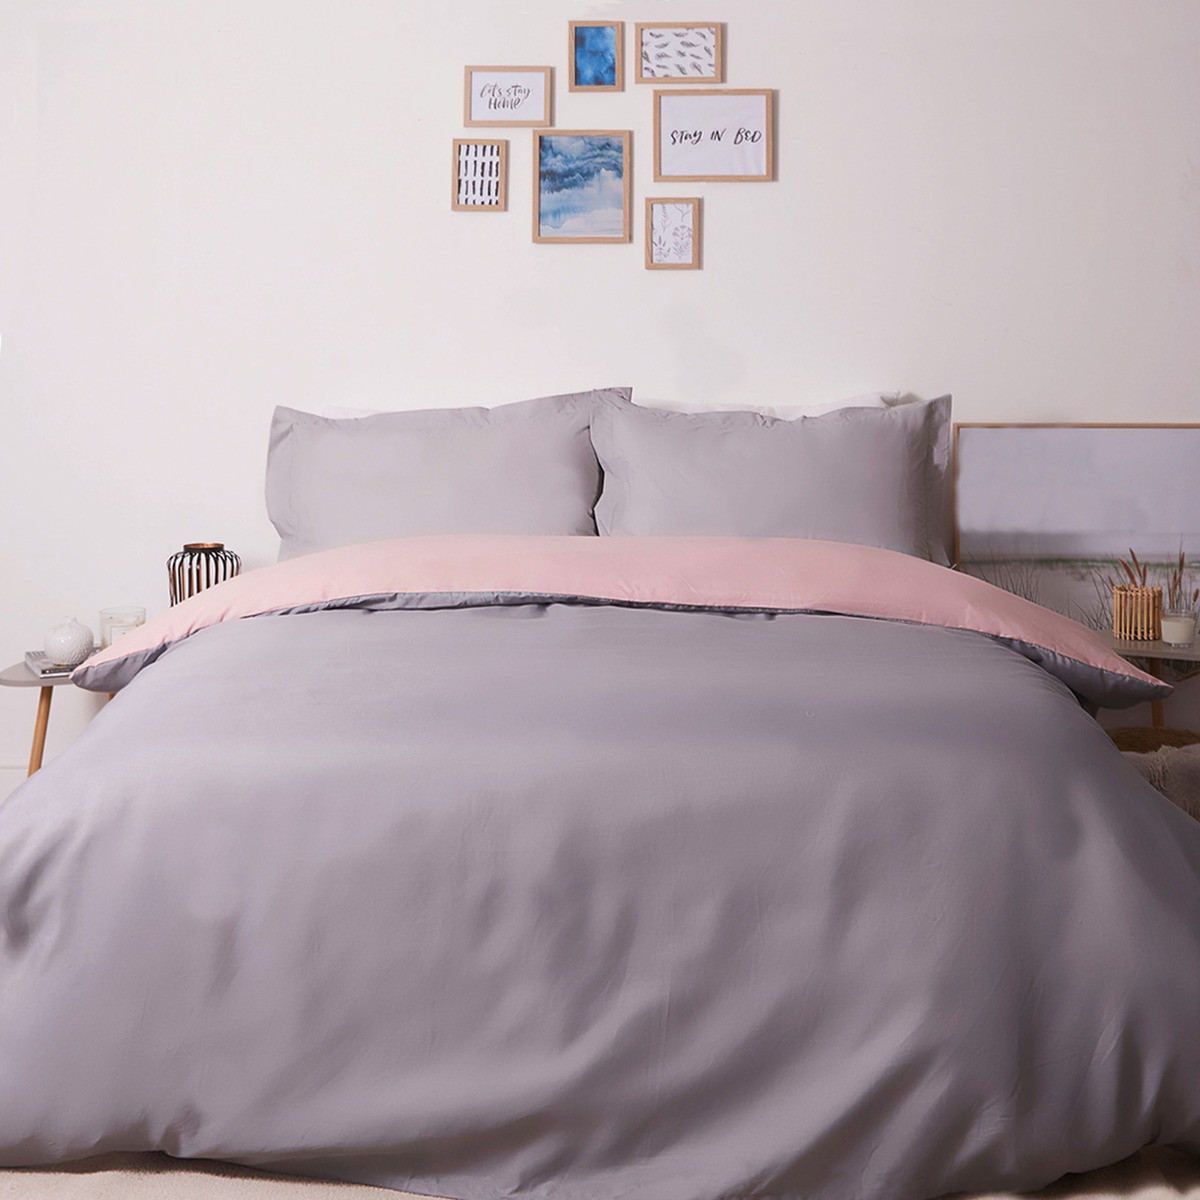 Brentfords Plain Dye Duvet Cover Set with Oxford Pillowcase - Blush Pink / Grey>